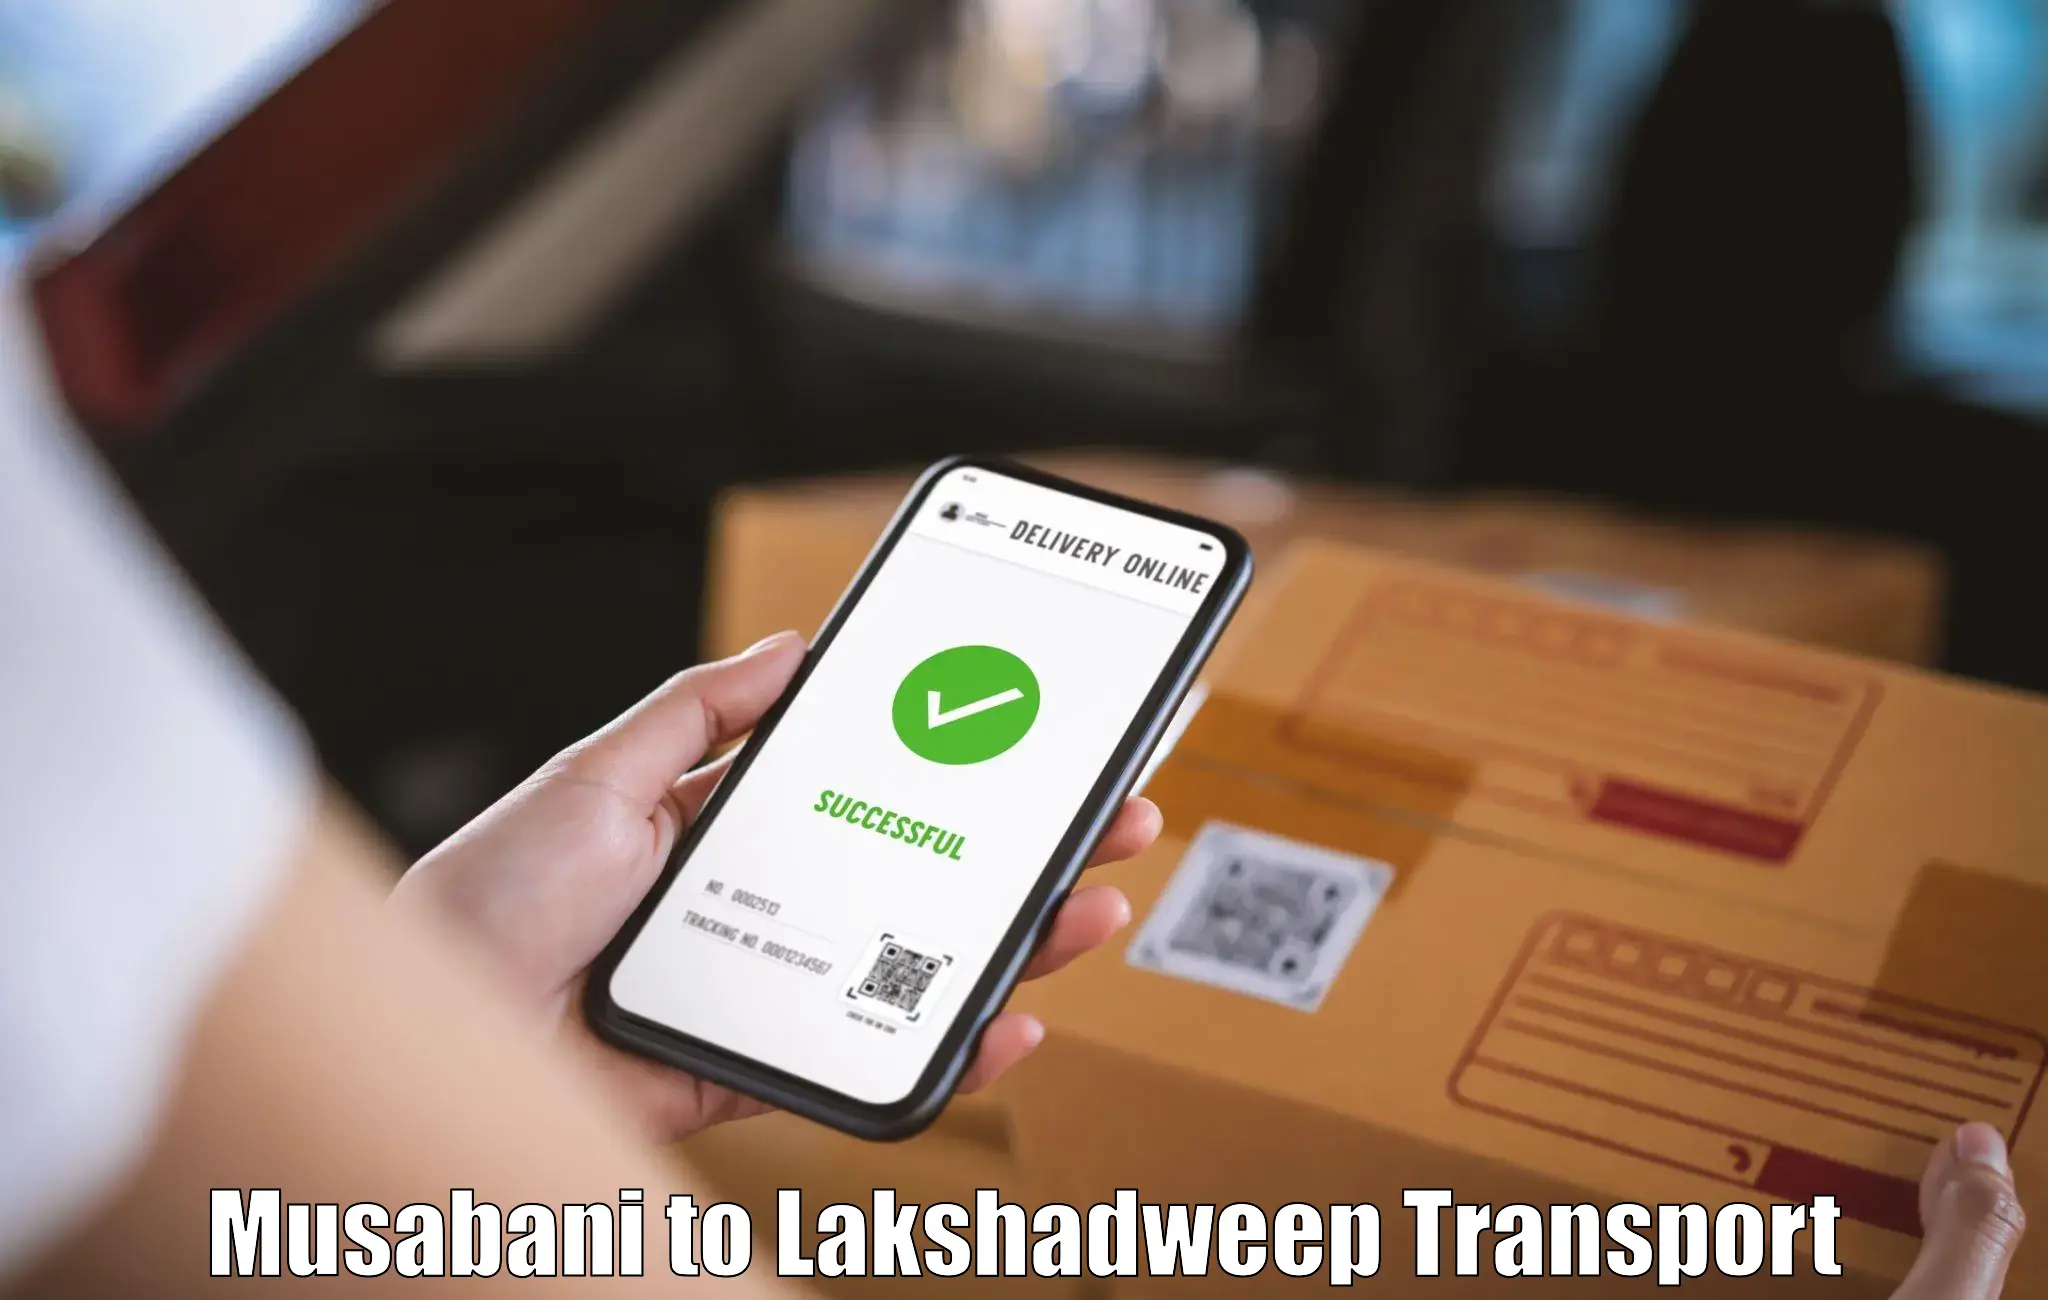 Online transport service Musabani to Lakshadweep